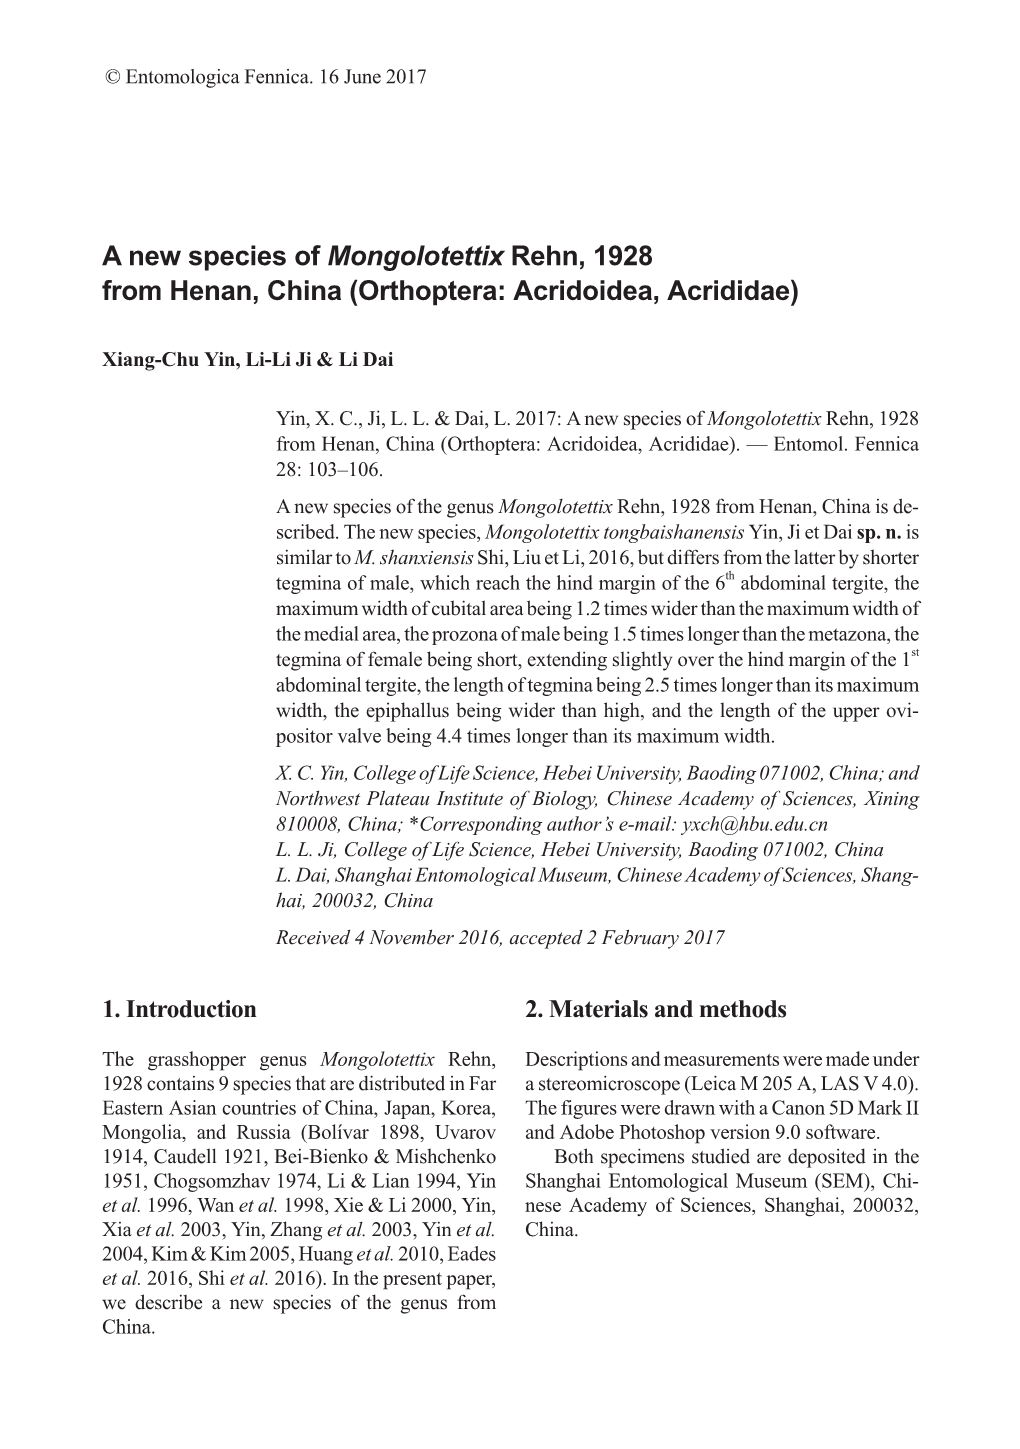 A New Species of Mongolotettix Rehn, 1928 from Henan, China (Orthoptera: Acridoidea, Acrididae)